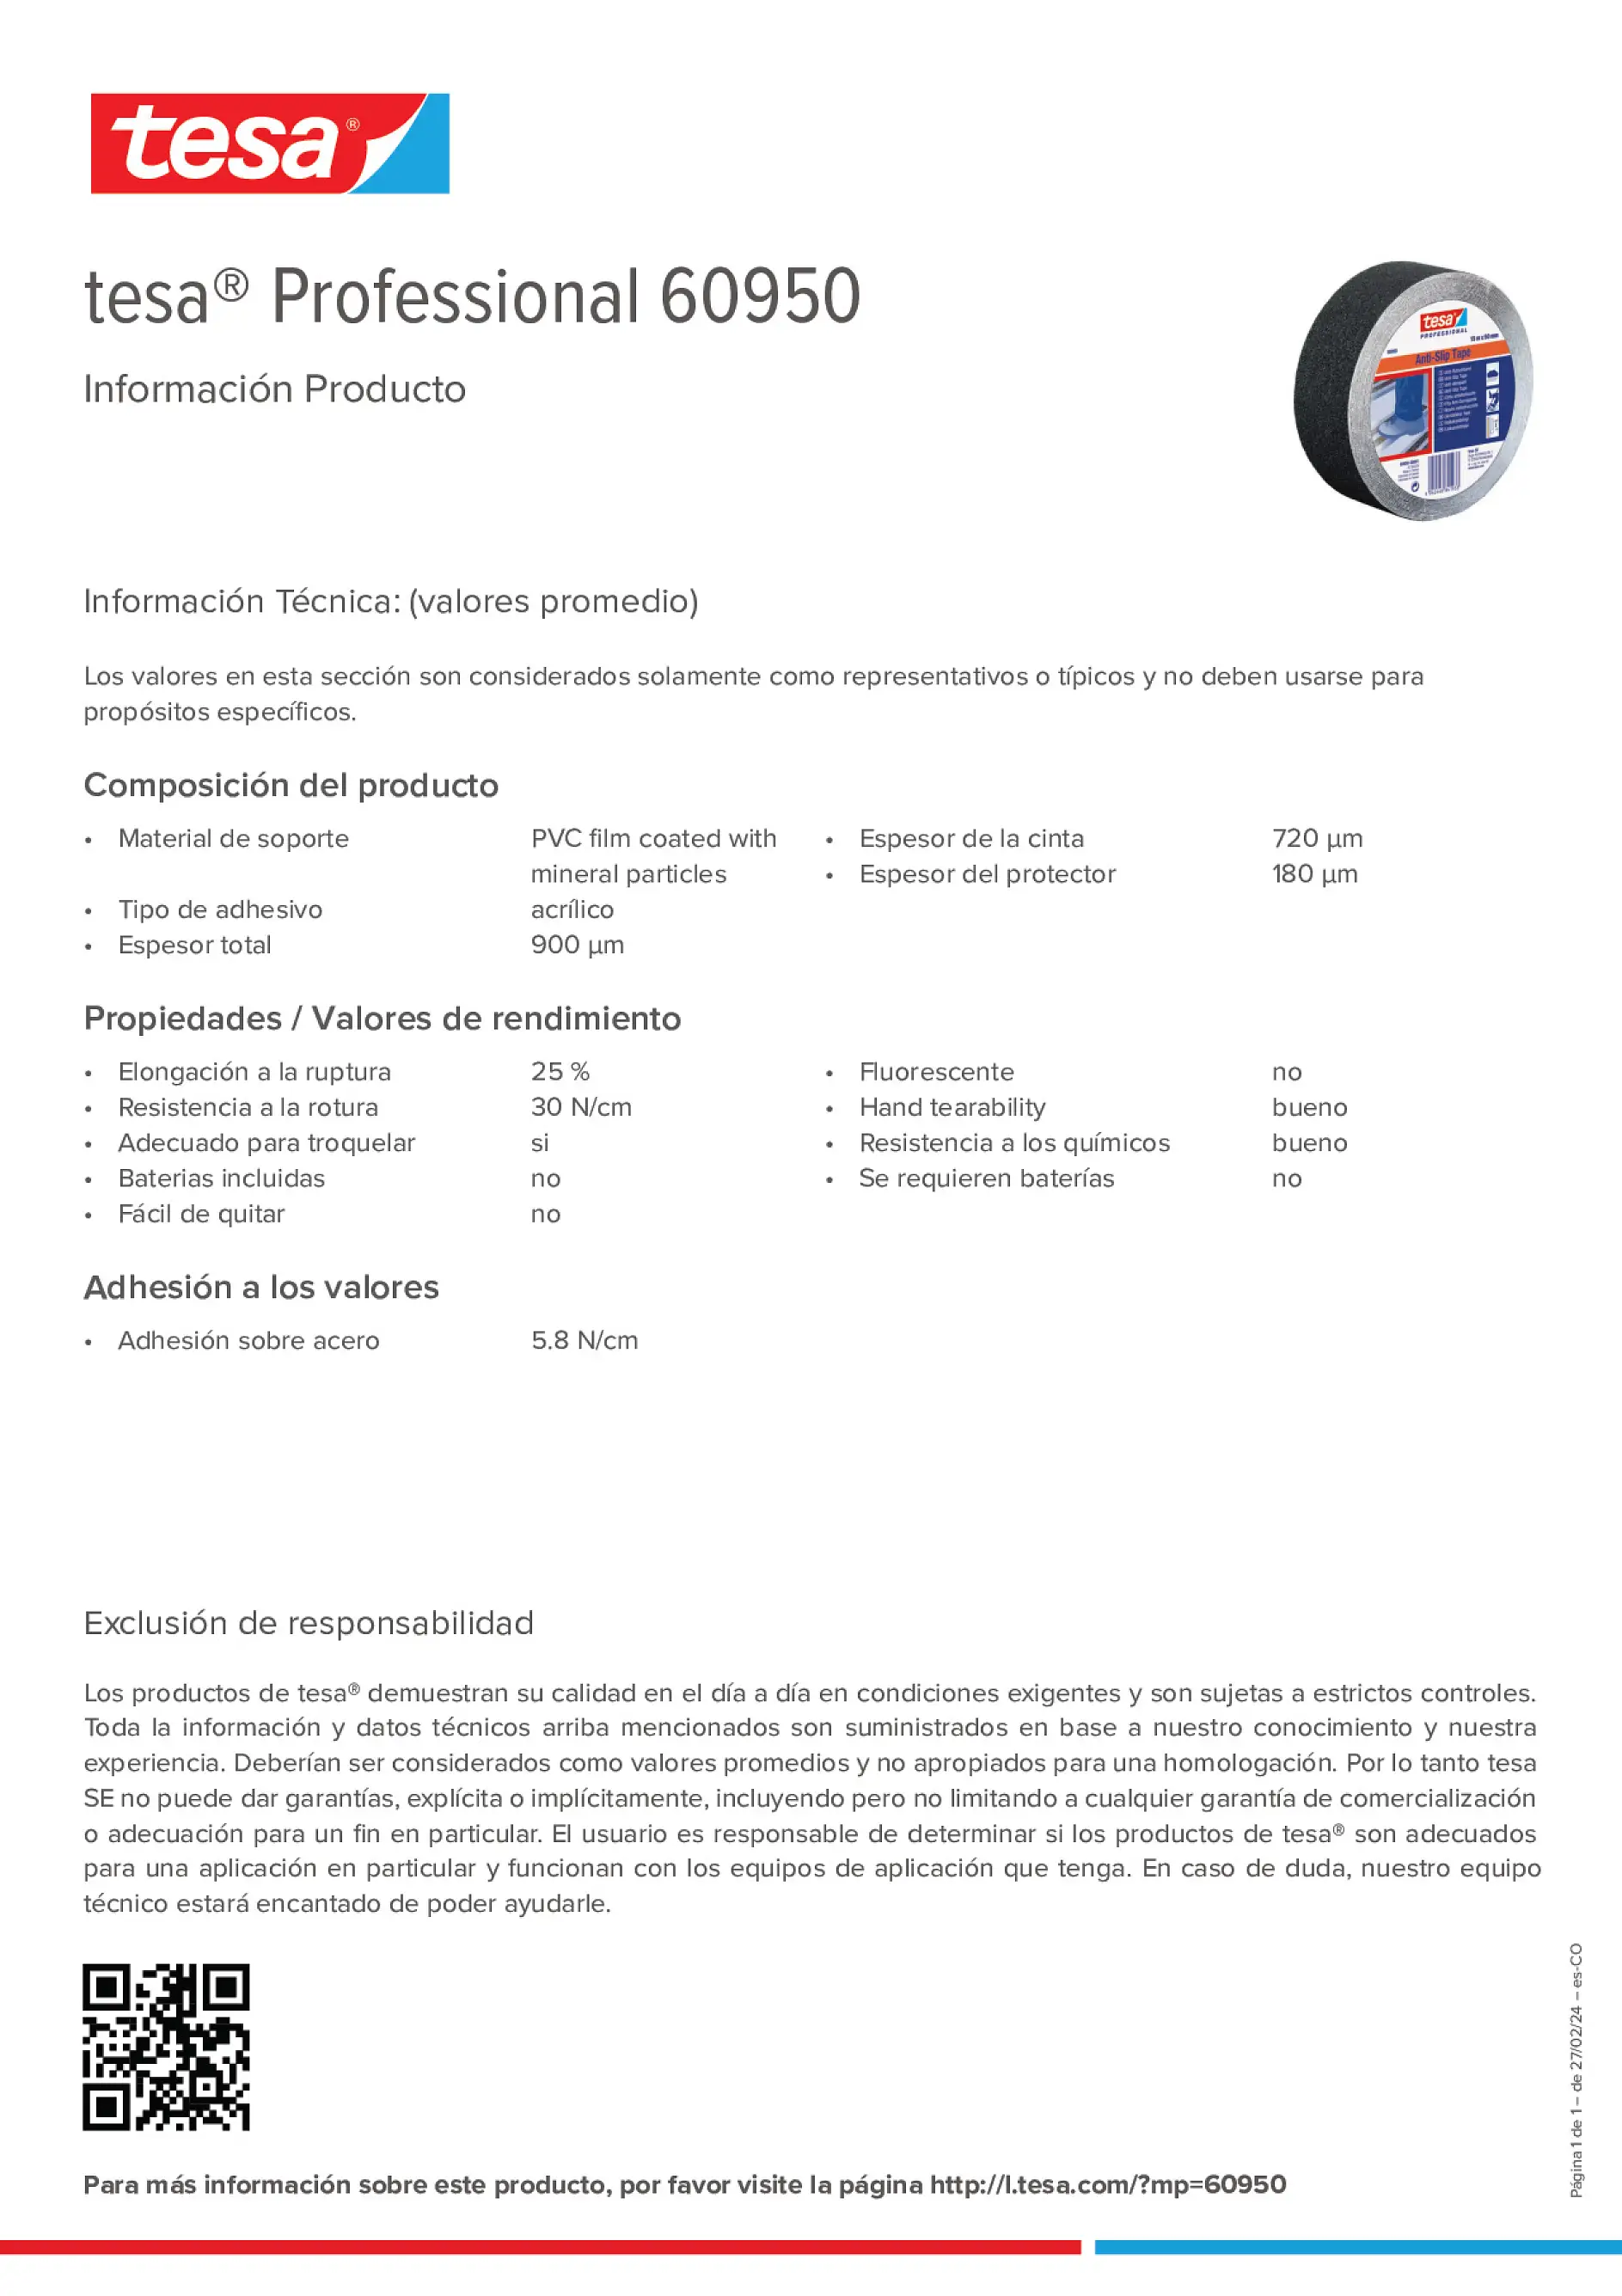 Product information_tesa® Professional 60950_es-CO